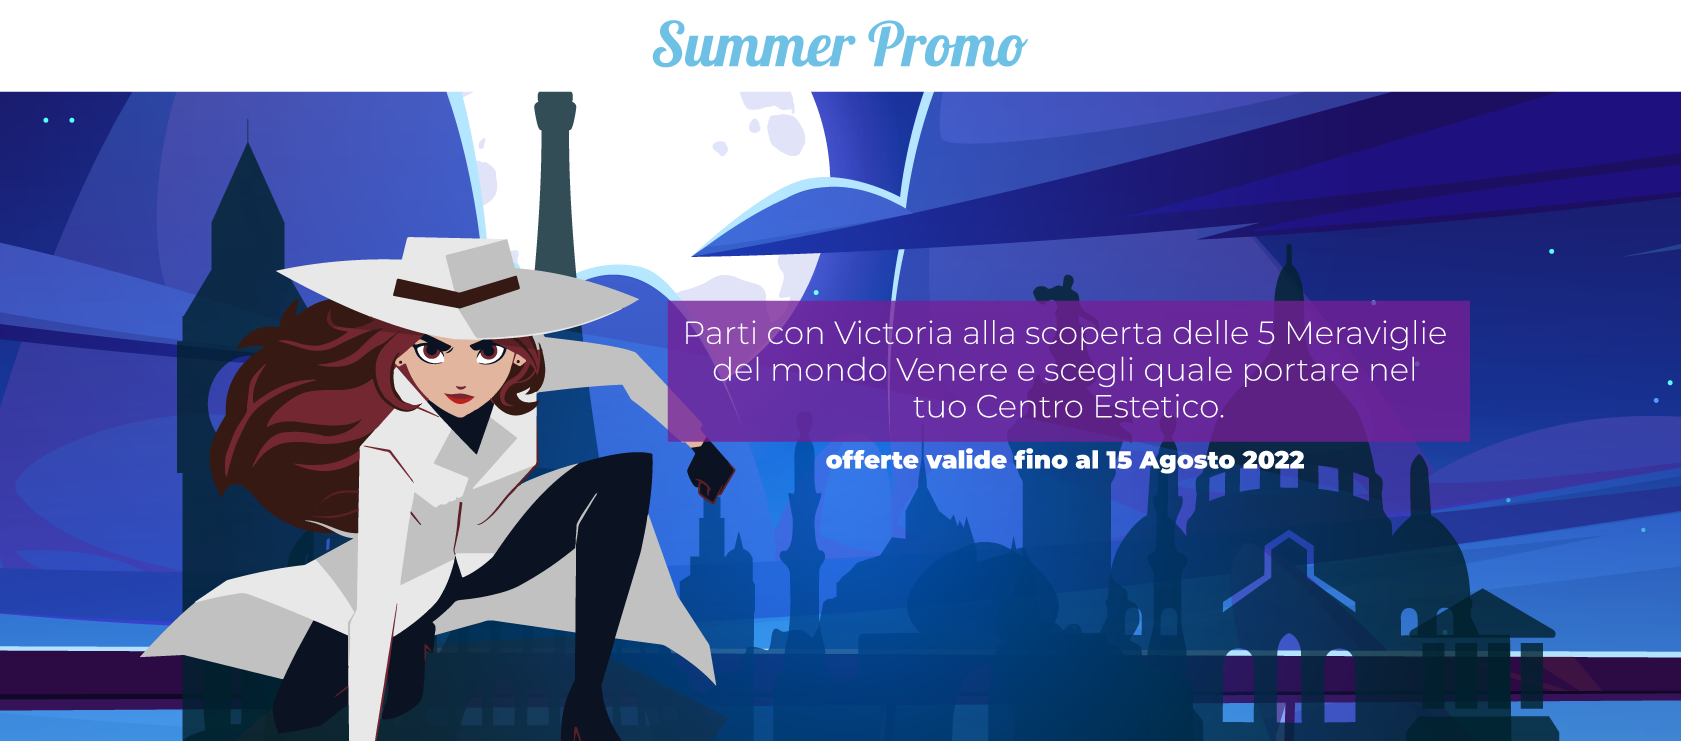 Summer Promo by Venere